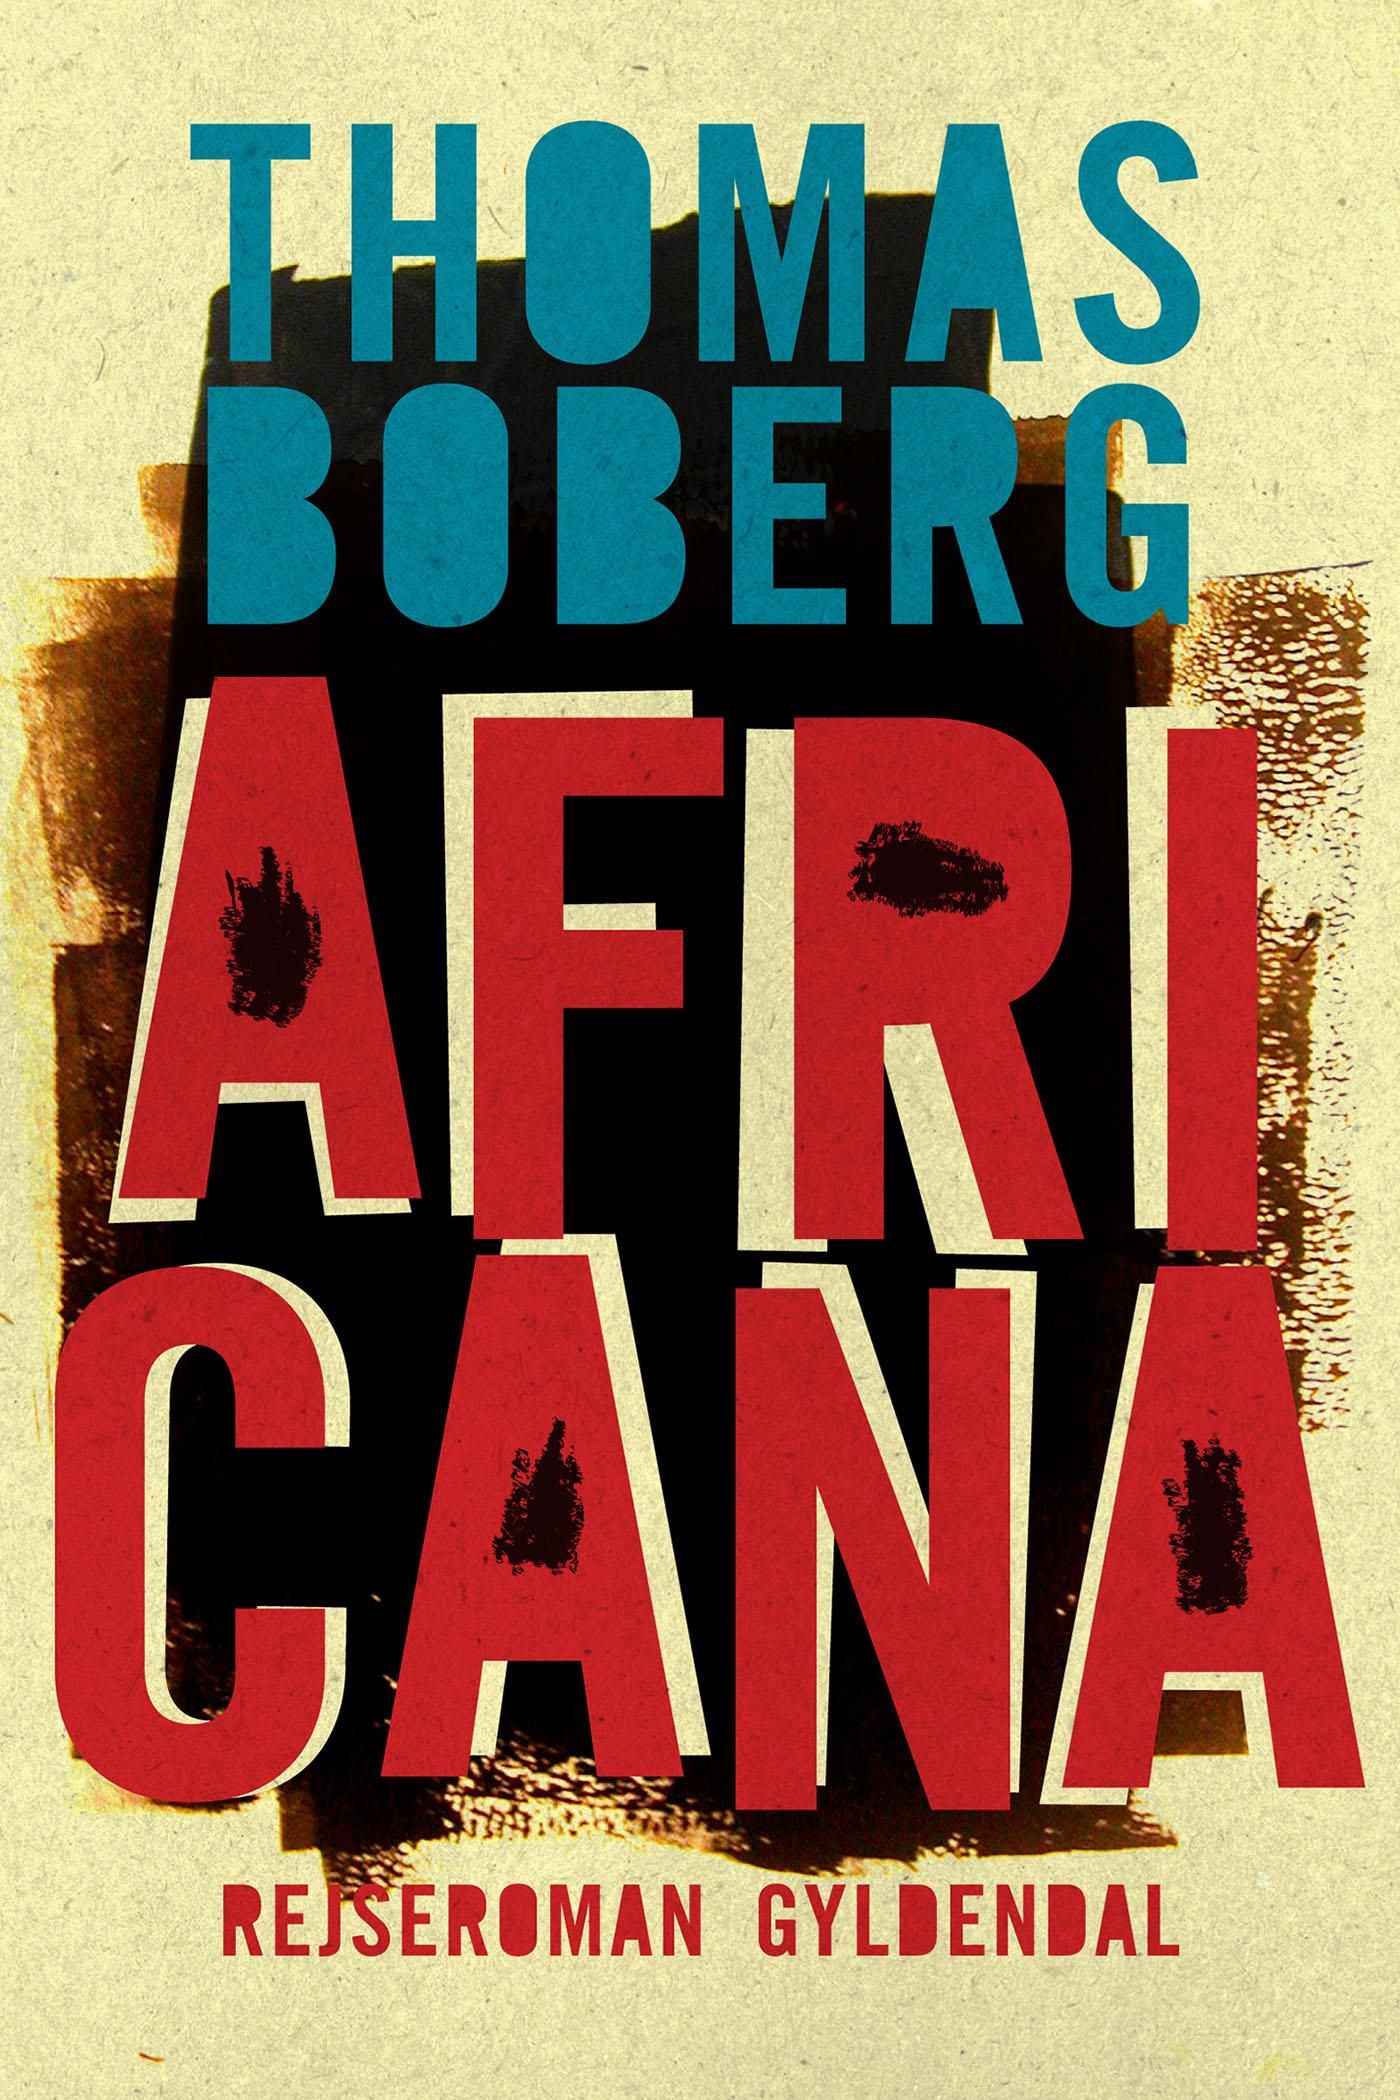 Africana, e-bog af Thomas Boberg